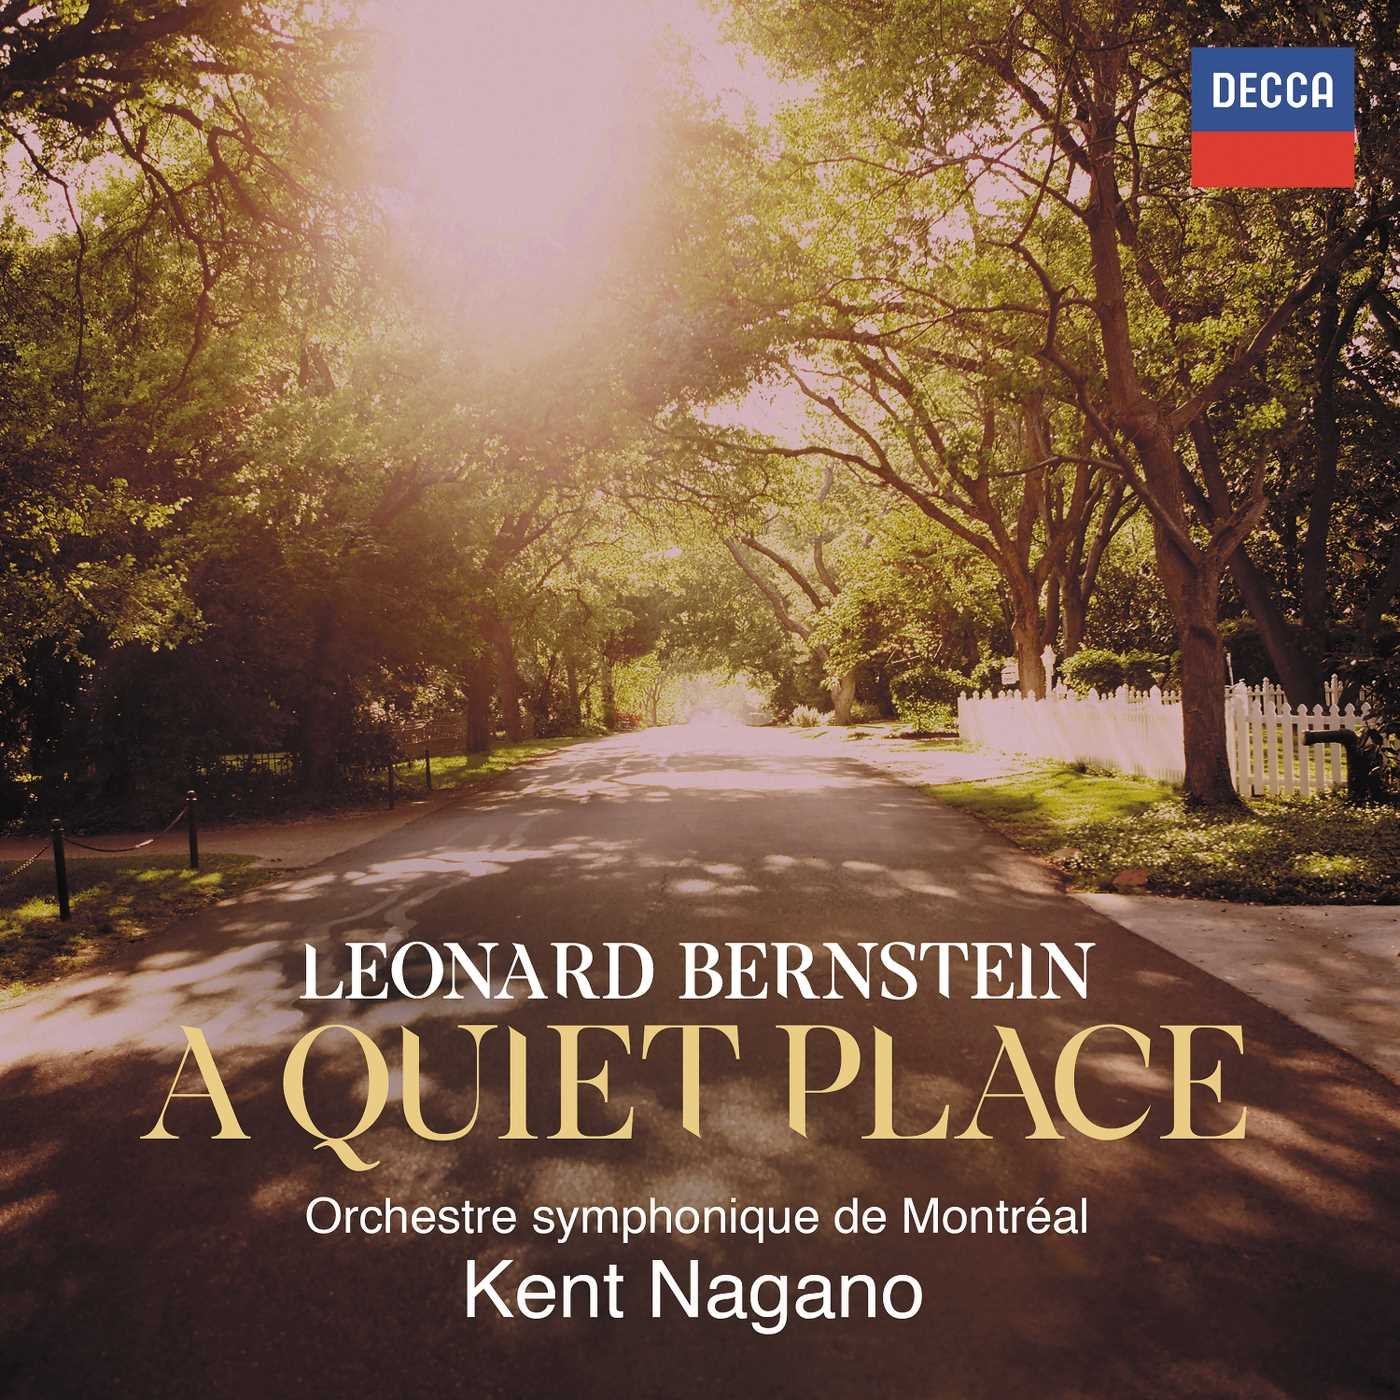 IN REVIEW: Leonard Bernstein - A QUIET PLACE (DECCA 483 3895)